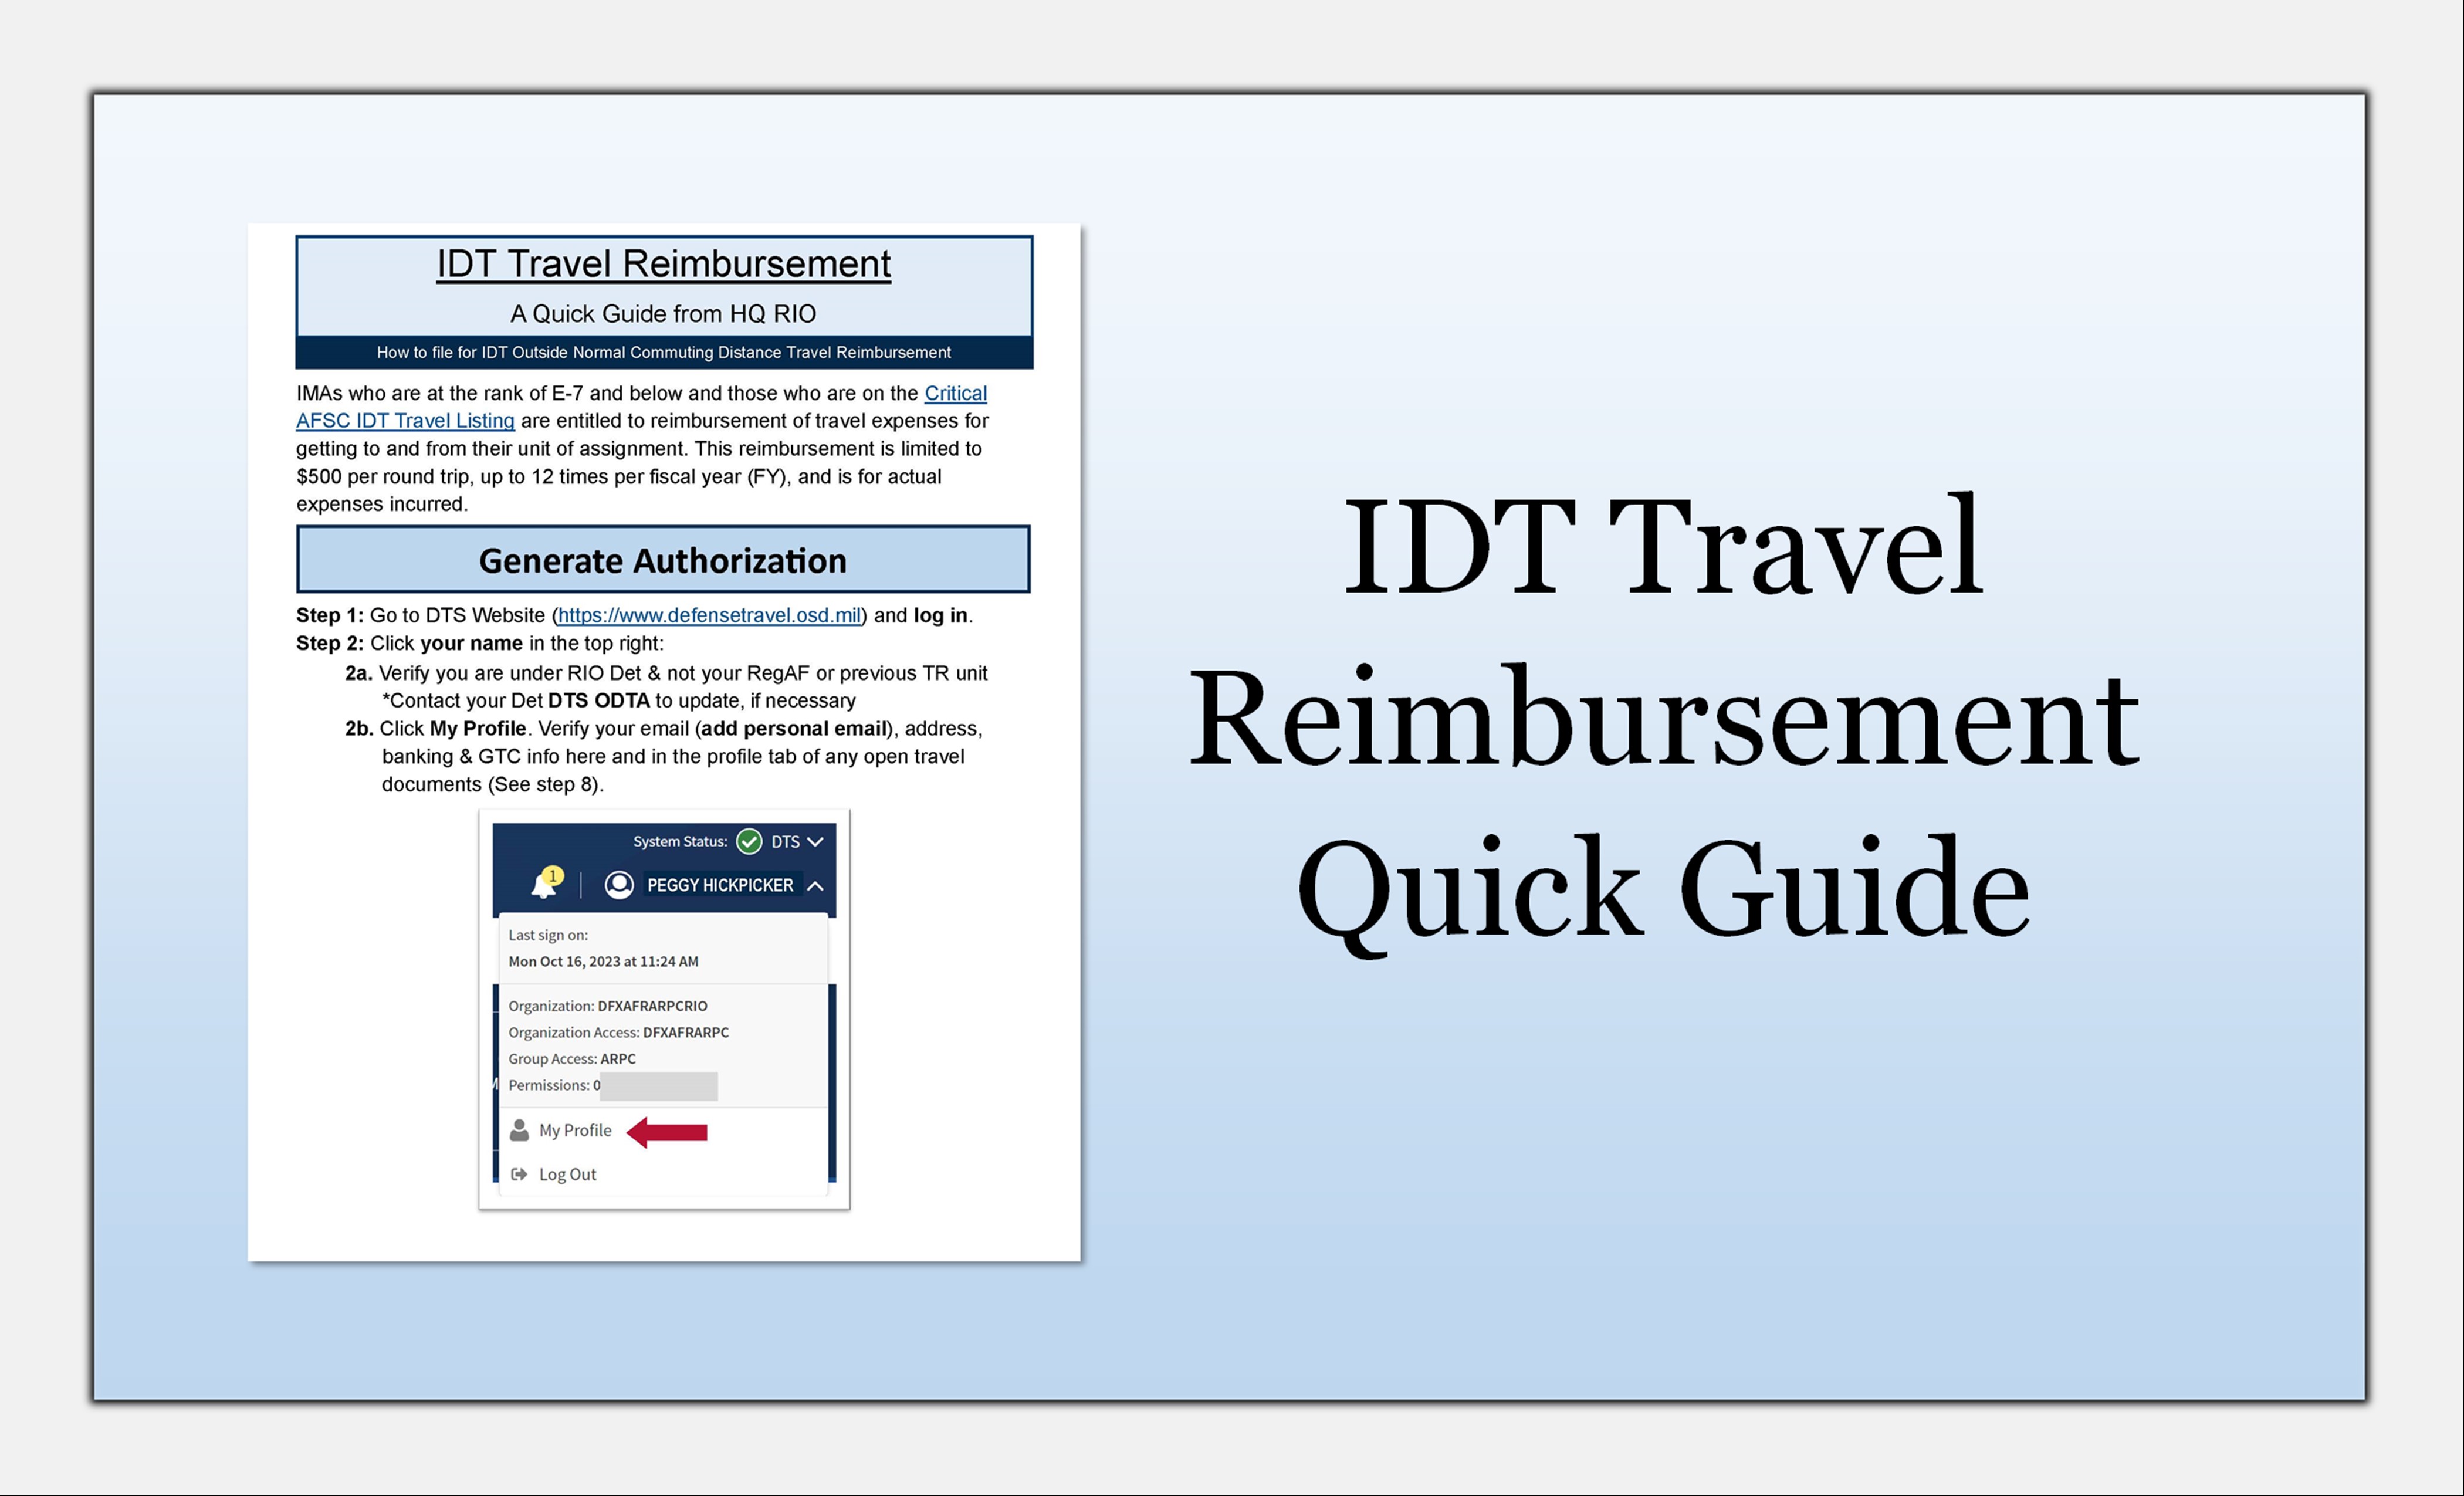 IDT Travel Reimbursement Quick Guide graphic link